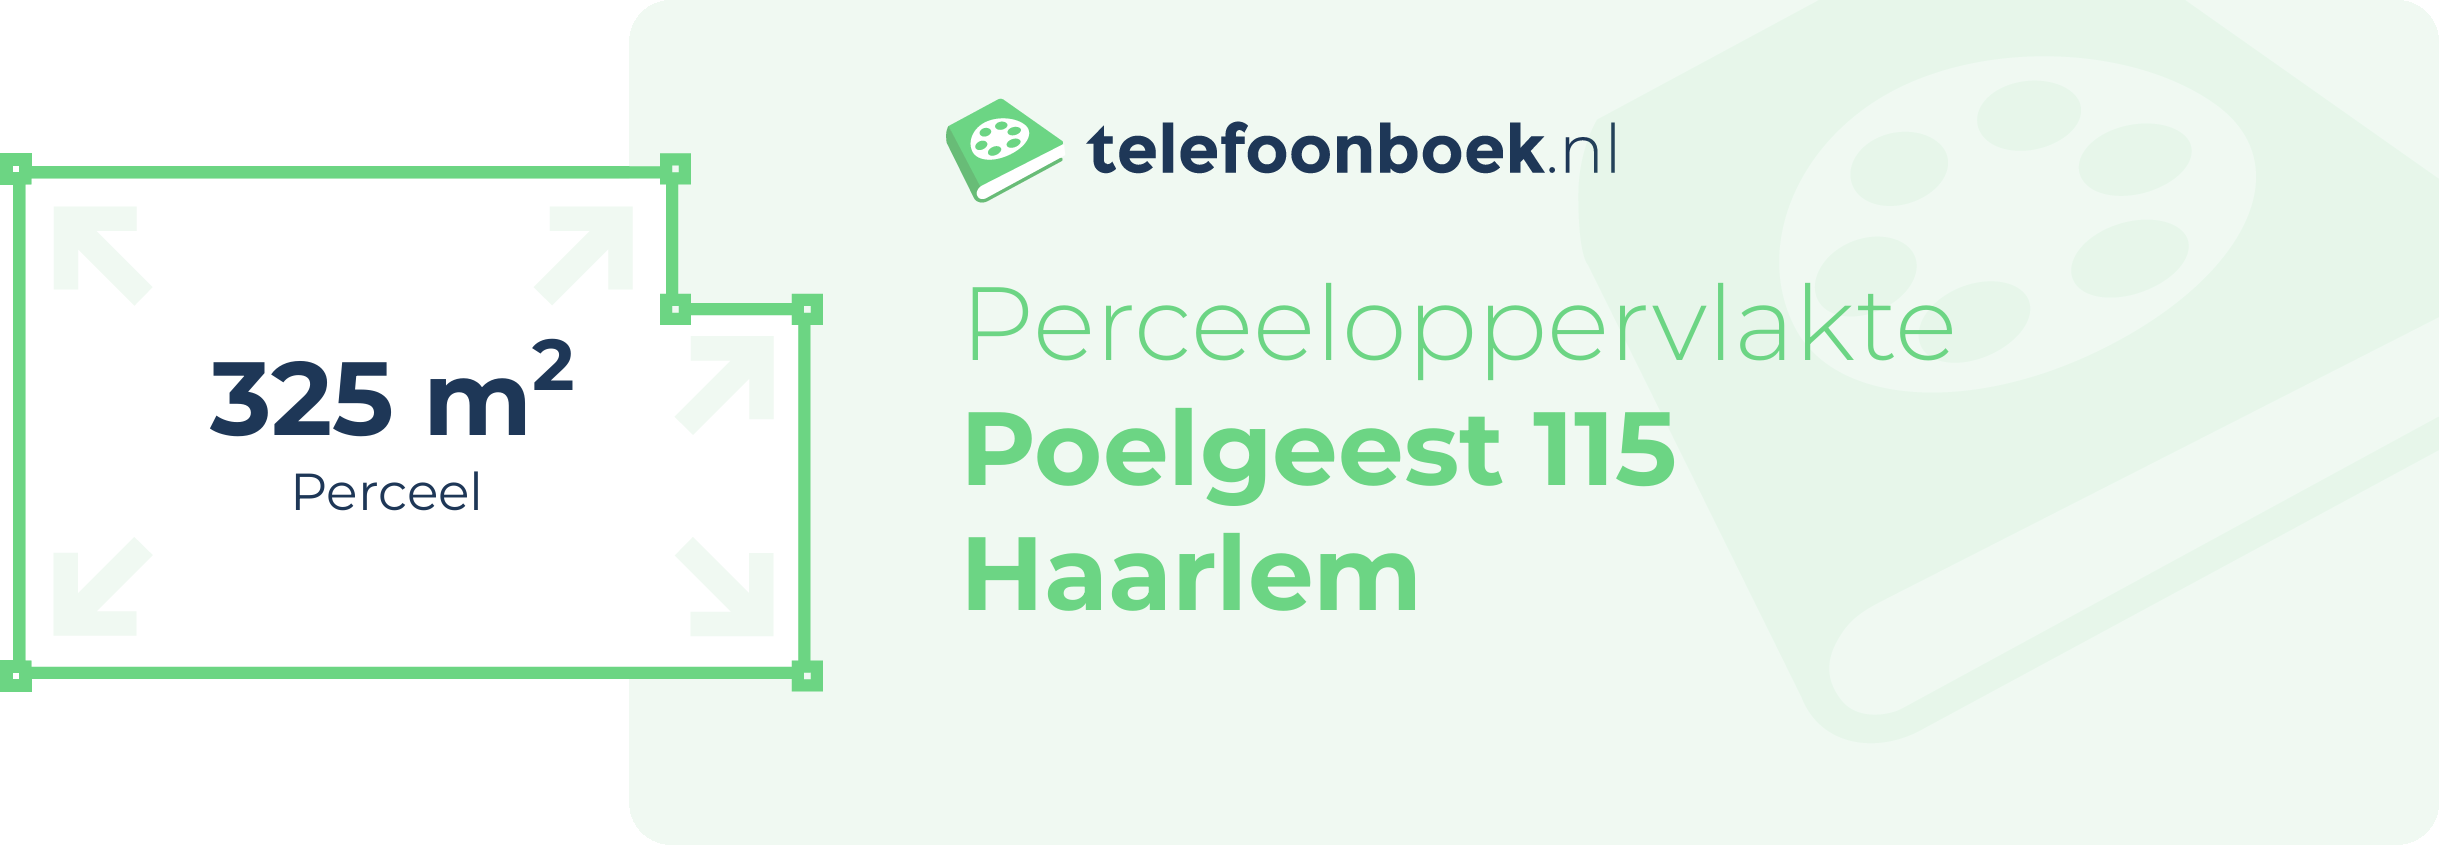 Perceeloppervlakte Poelgeest 115 Haarlem